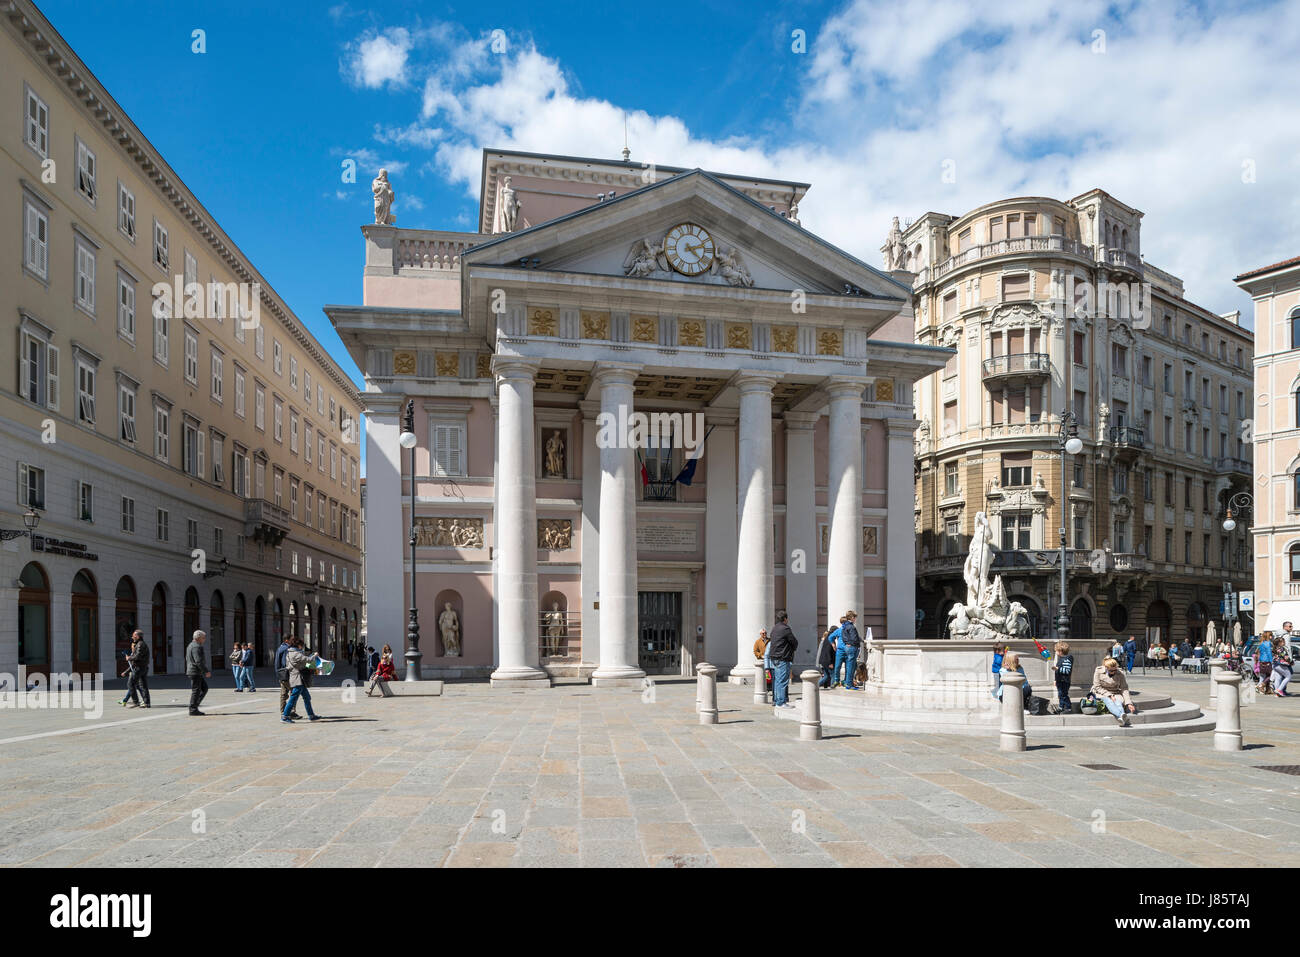 Old stock exchange, Palazzo del Borso, now seat of the Trieste Chamber of Commerce, Piazza della Borsa with fountain, Trieste Stock Photo